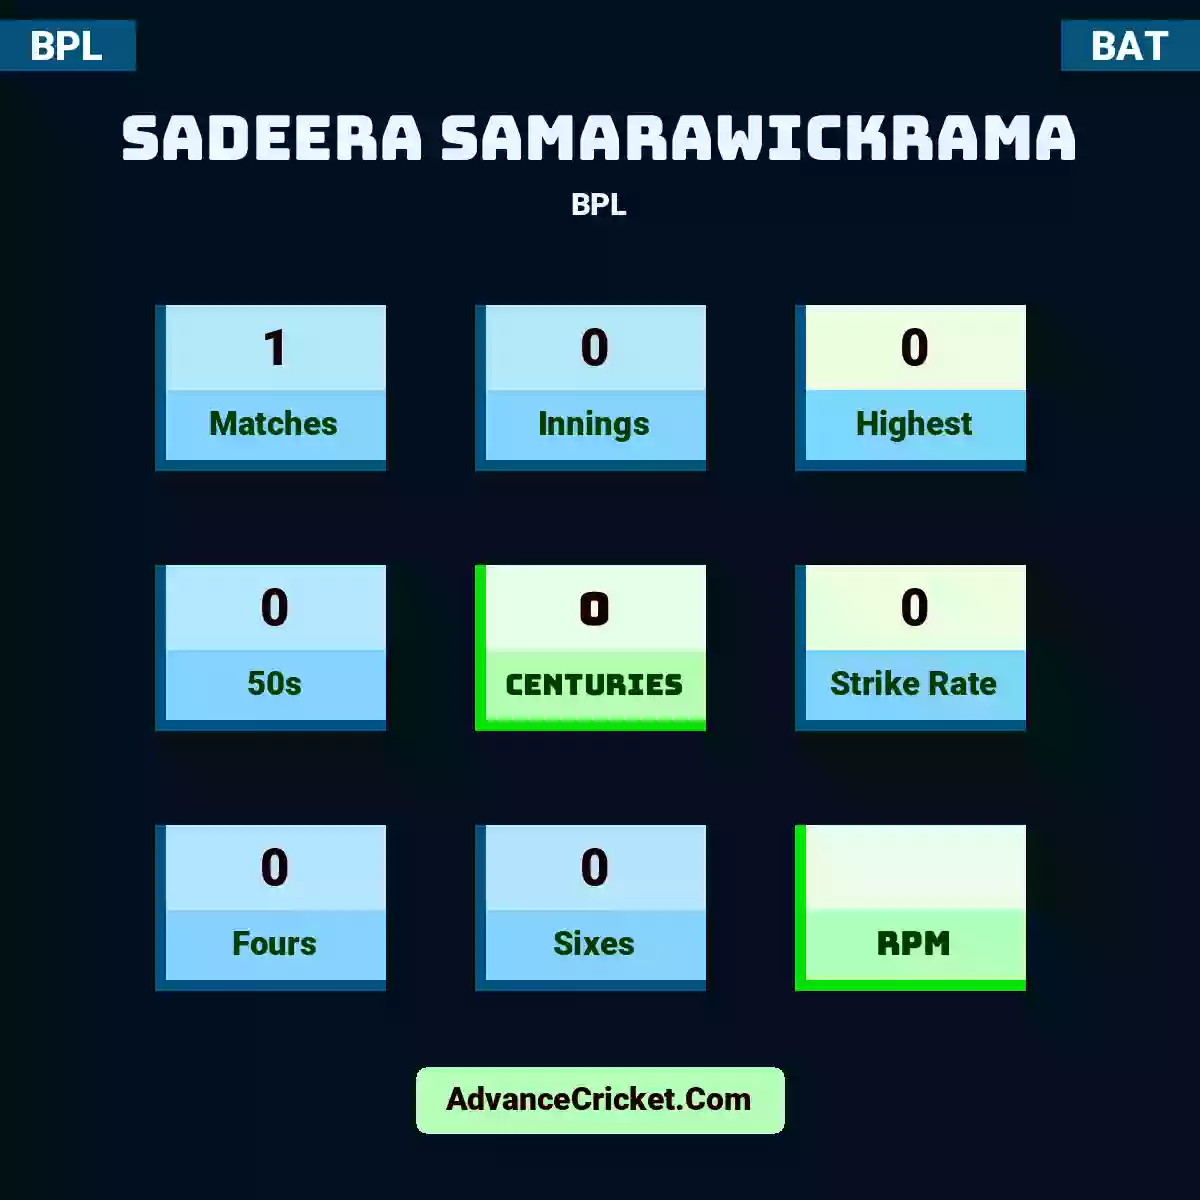 Sadeera Samarawickrama BPL , Sadeera Samarawickrama played 1 matches, scored 0 runs as highest, 0 half-centuries, and 0 centuries, with a strike rate of 0. S.Samarawickrama hit 0 fours and 0 sixes.